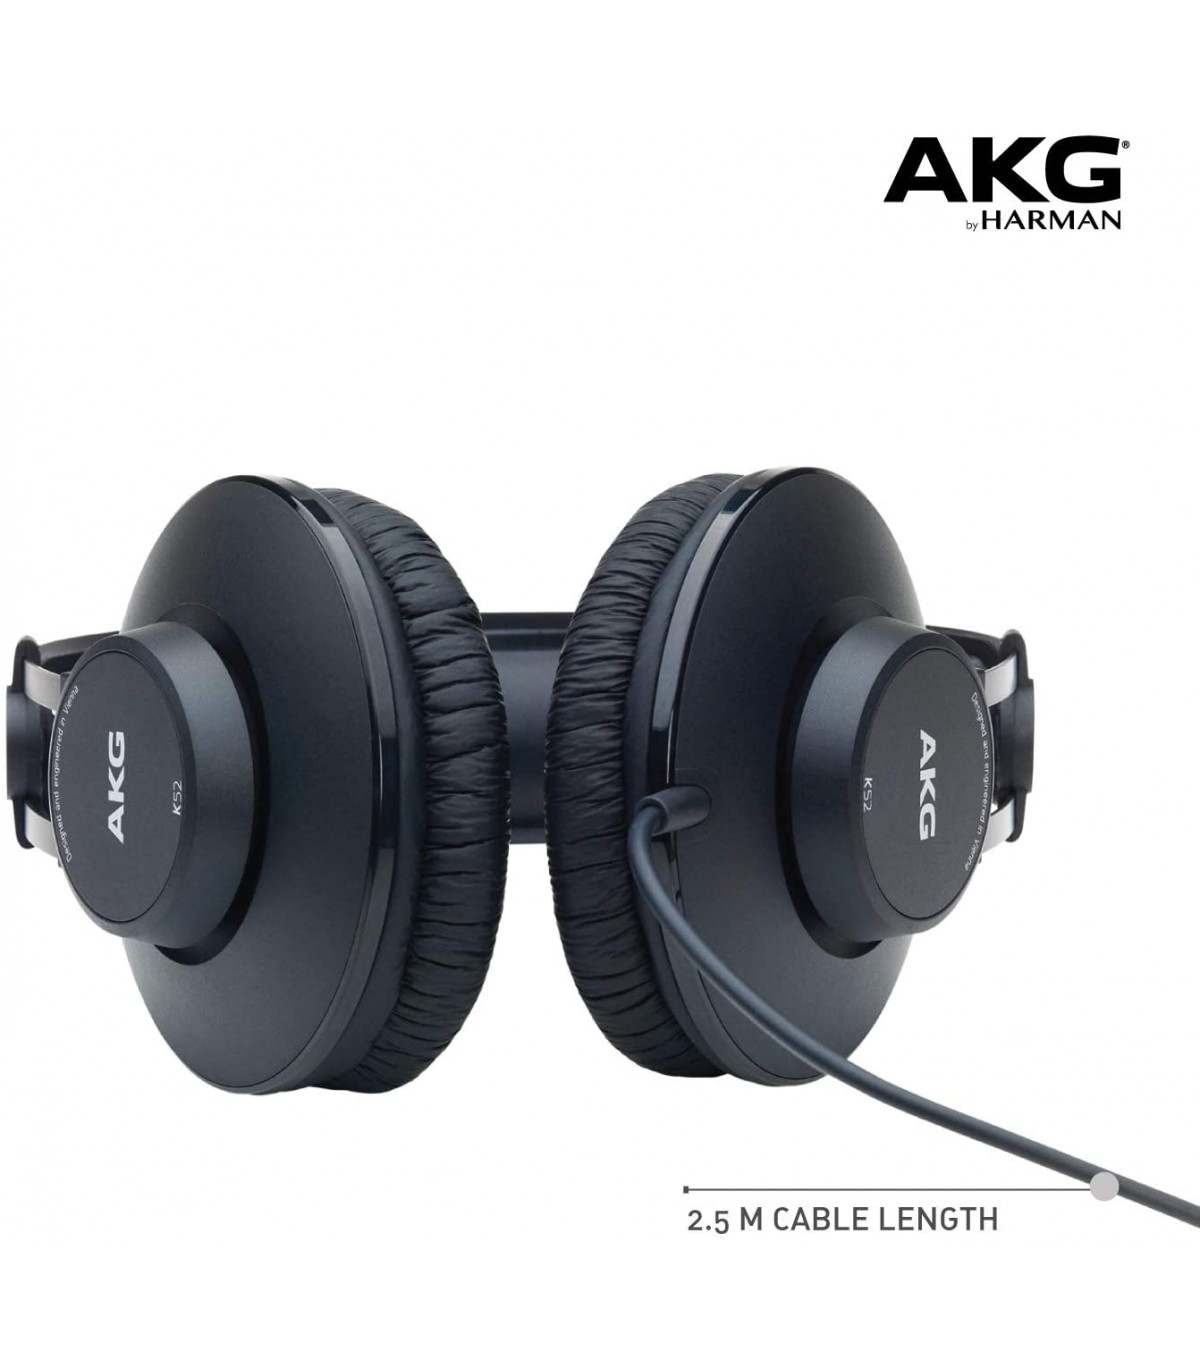 K52  Closed-back headphones